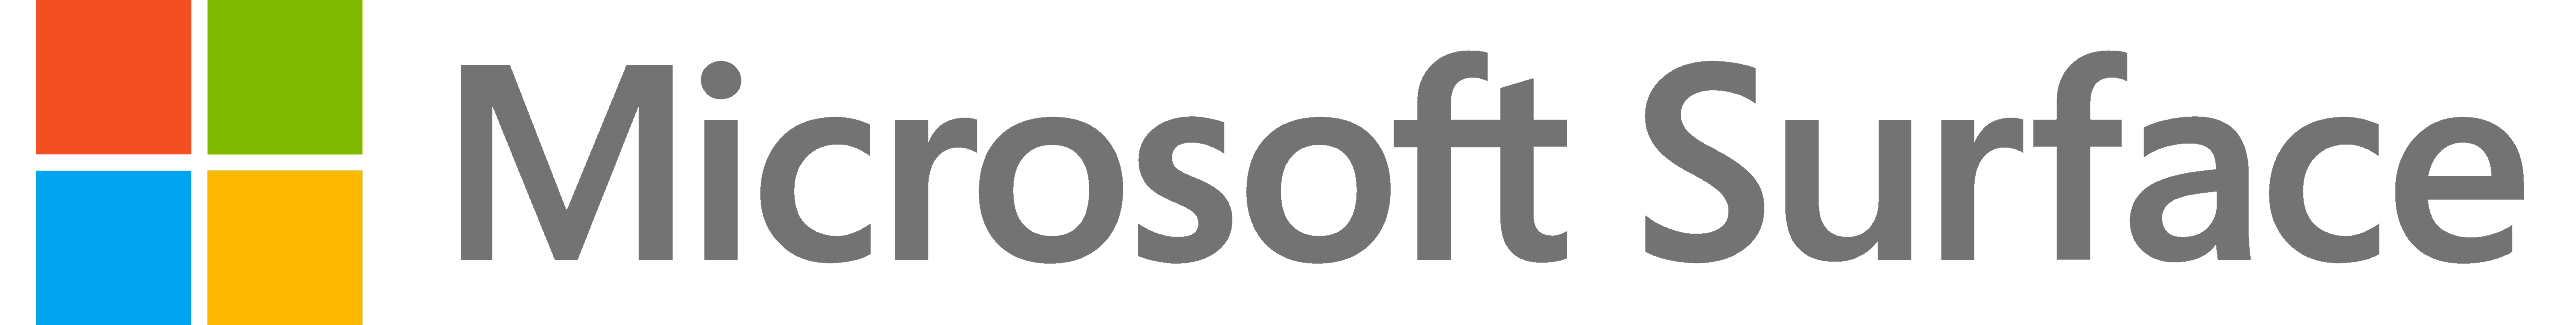 Microsoft Surface logo.svg